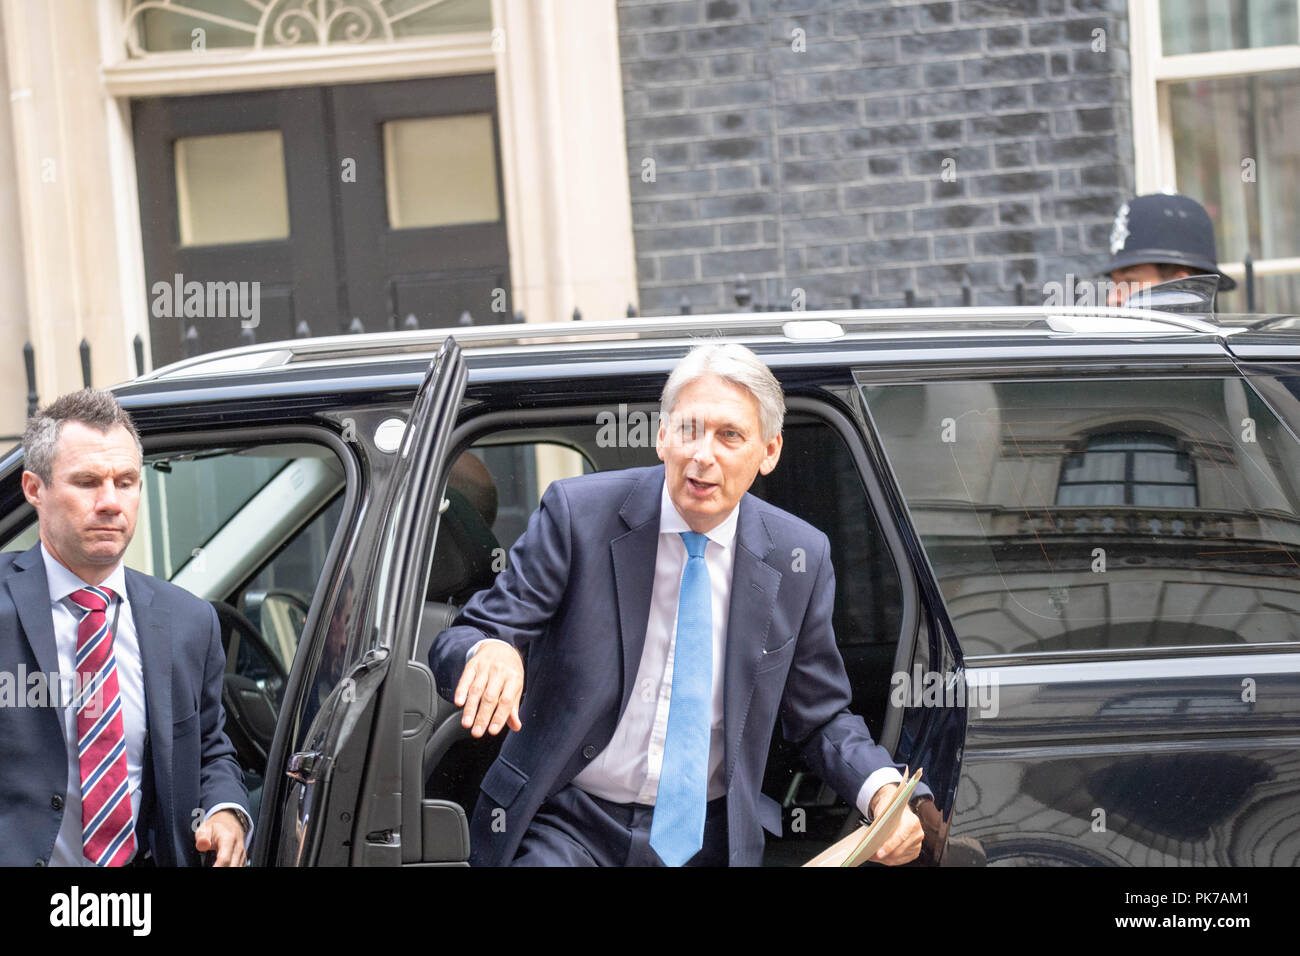 London, 11. September 2018, Phillip Hammond MP PC, Schatzkanzler, kommt an einer Kabinettssitzung am 10 Downing Street, London Credit Ian Davidson/Alamy leben Nachrichten Stockfoto